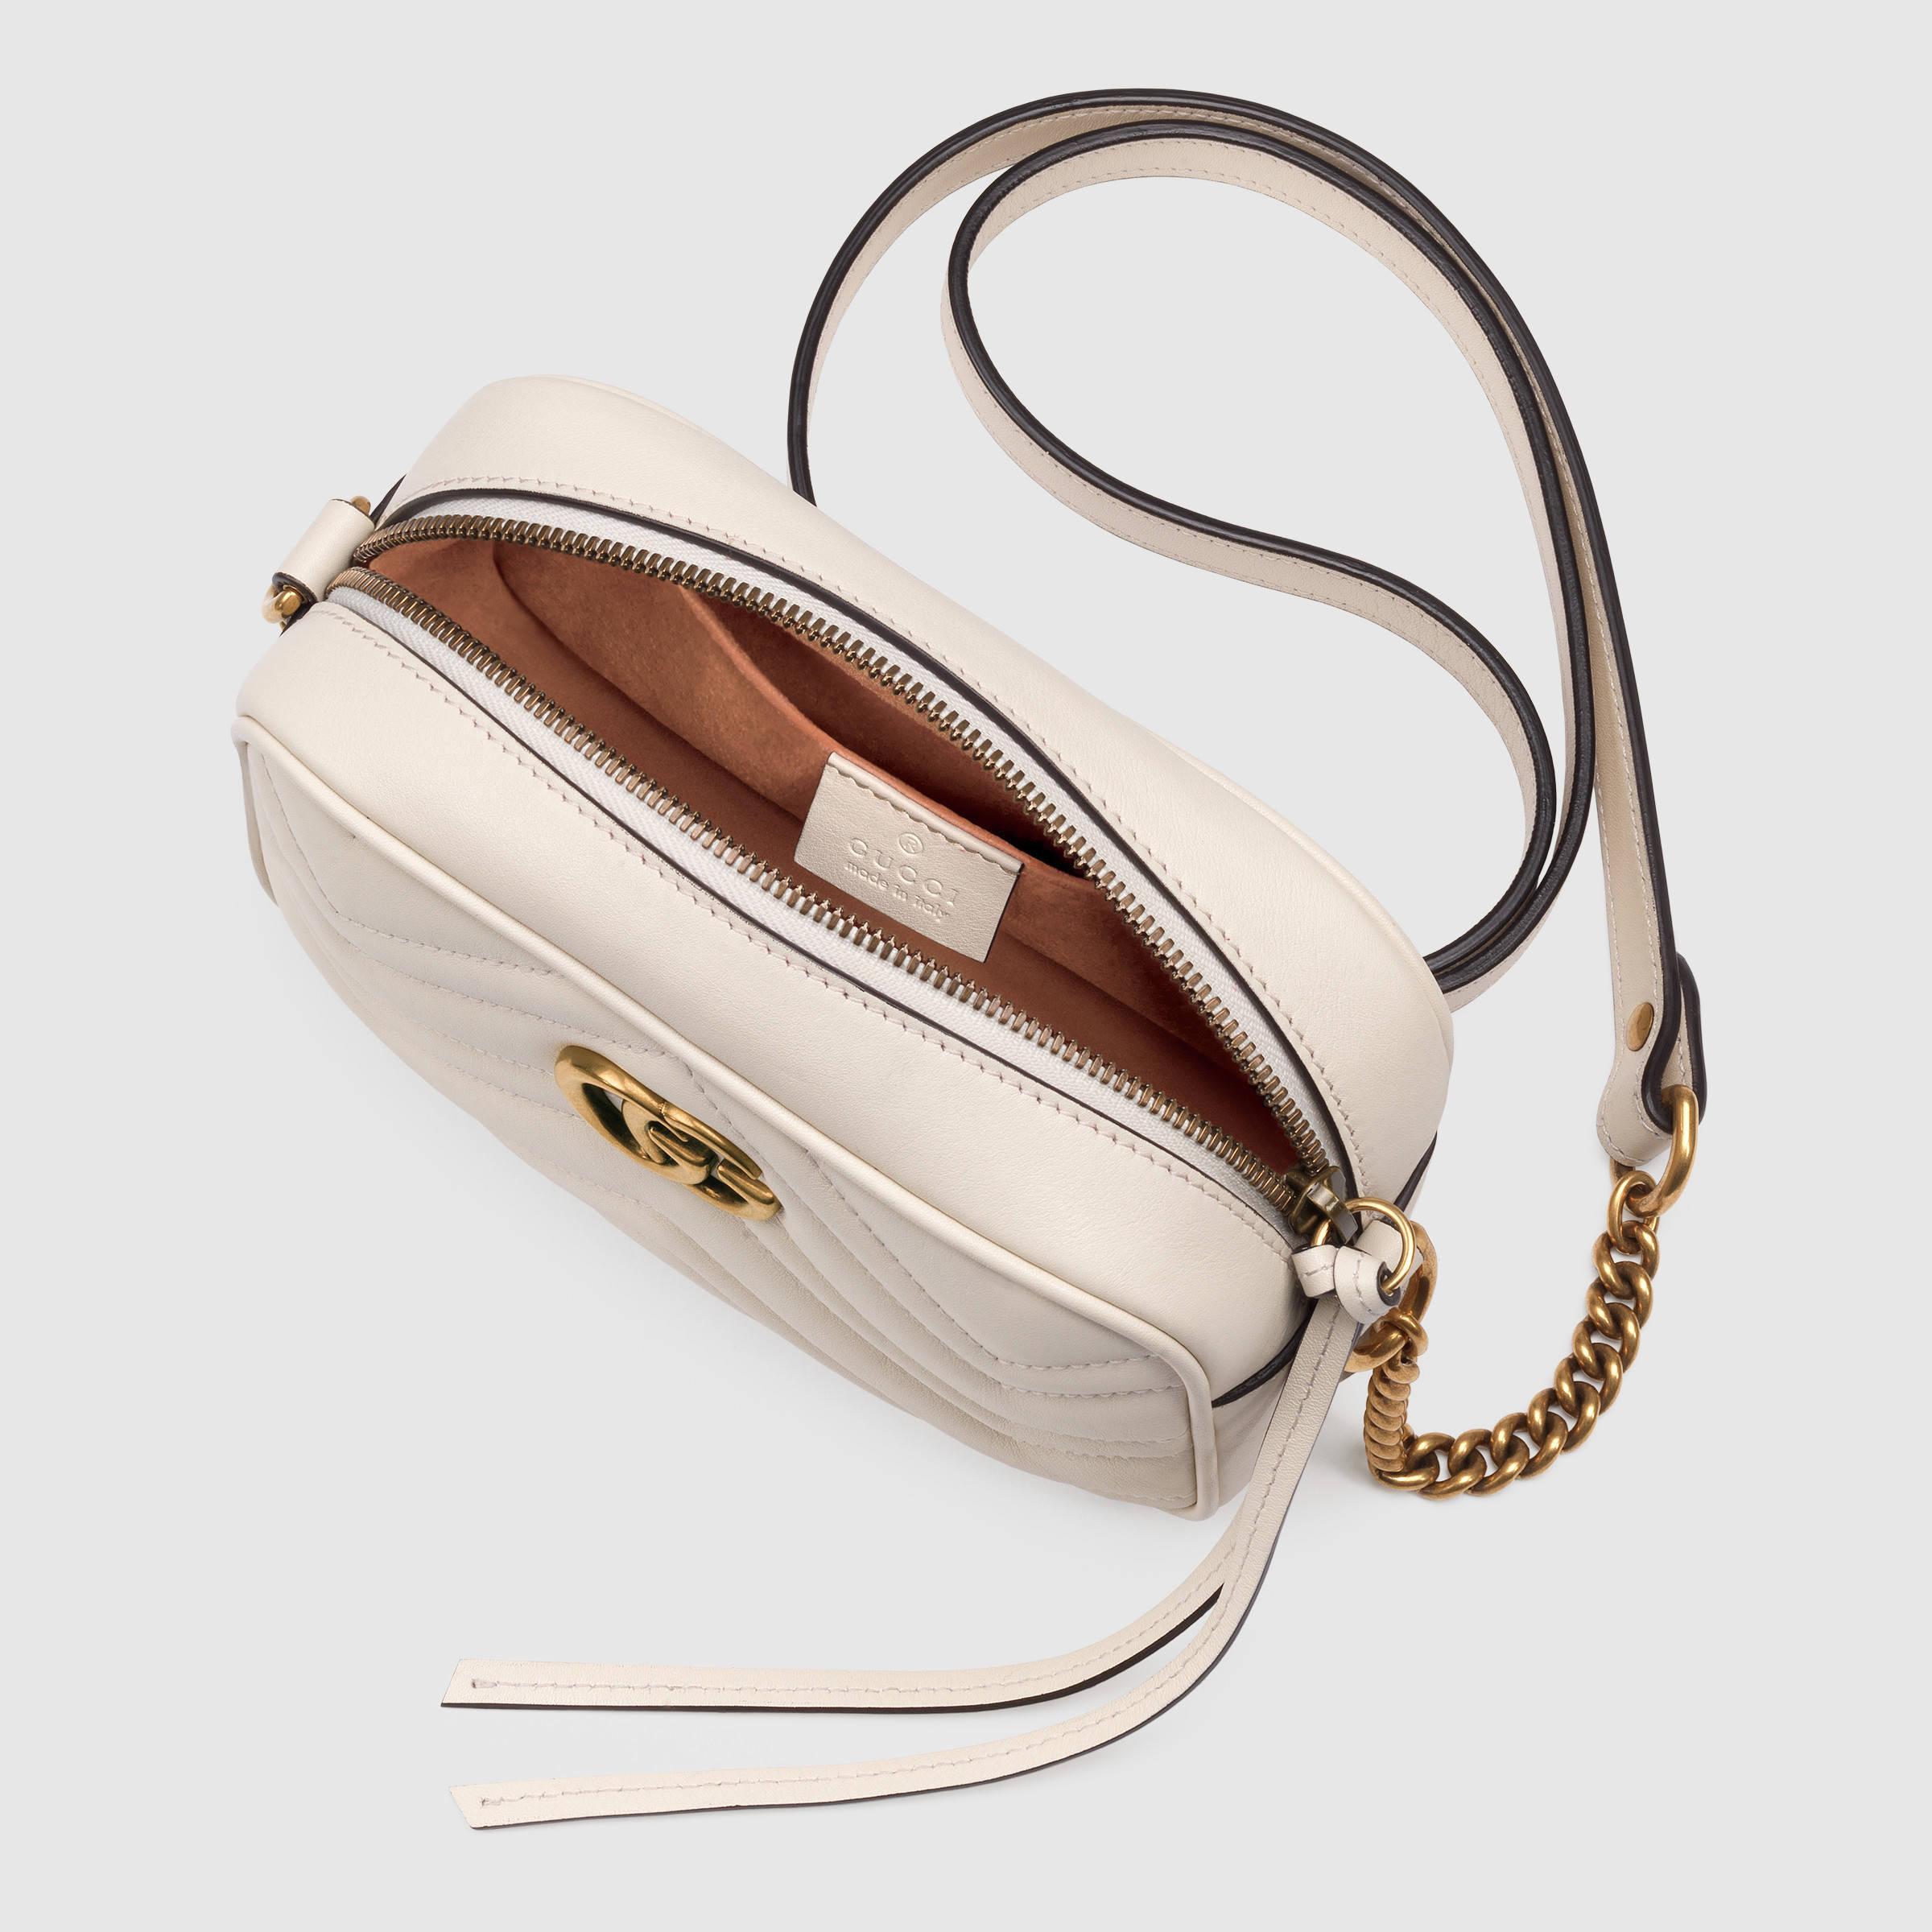 Lyst - Gucci GG Marmont Matelassé Leather Mini Shoulder Bag in White